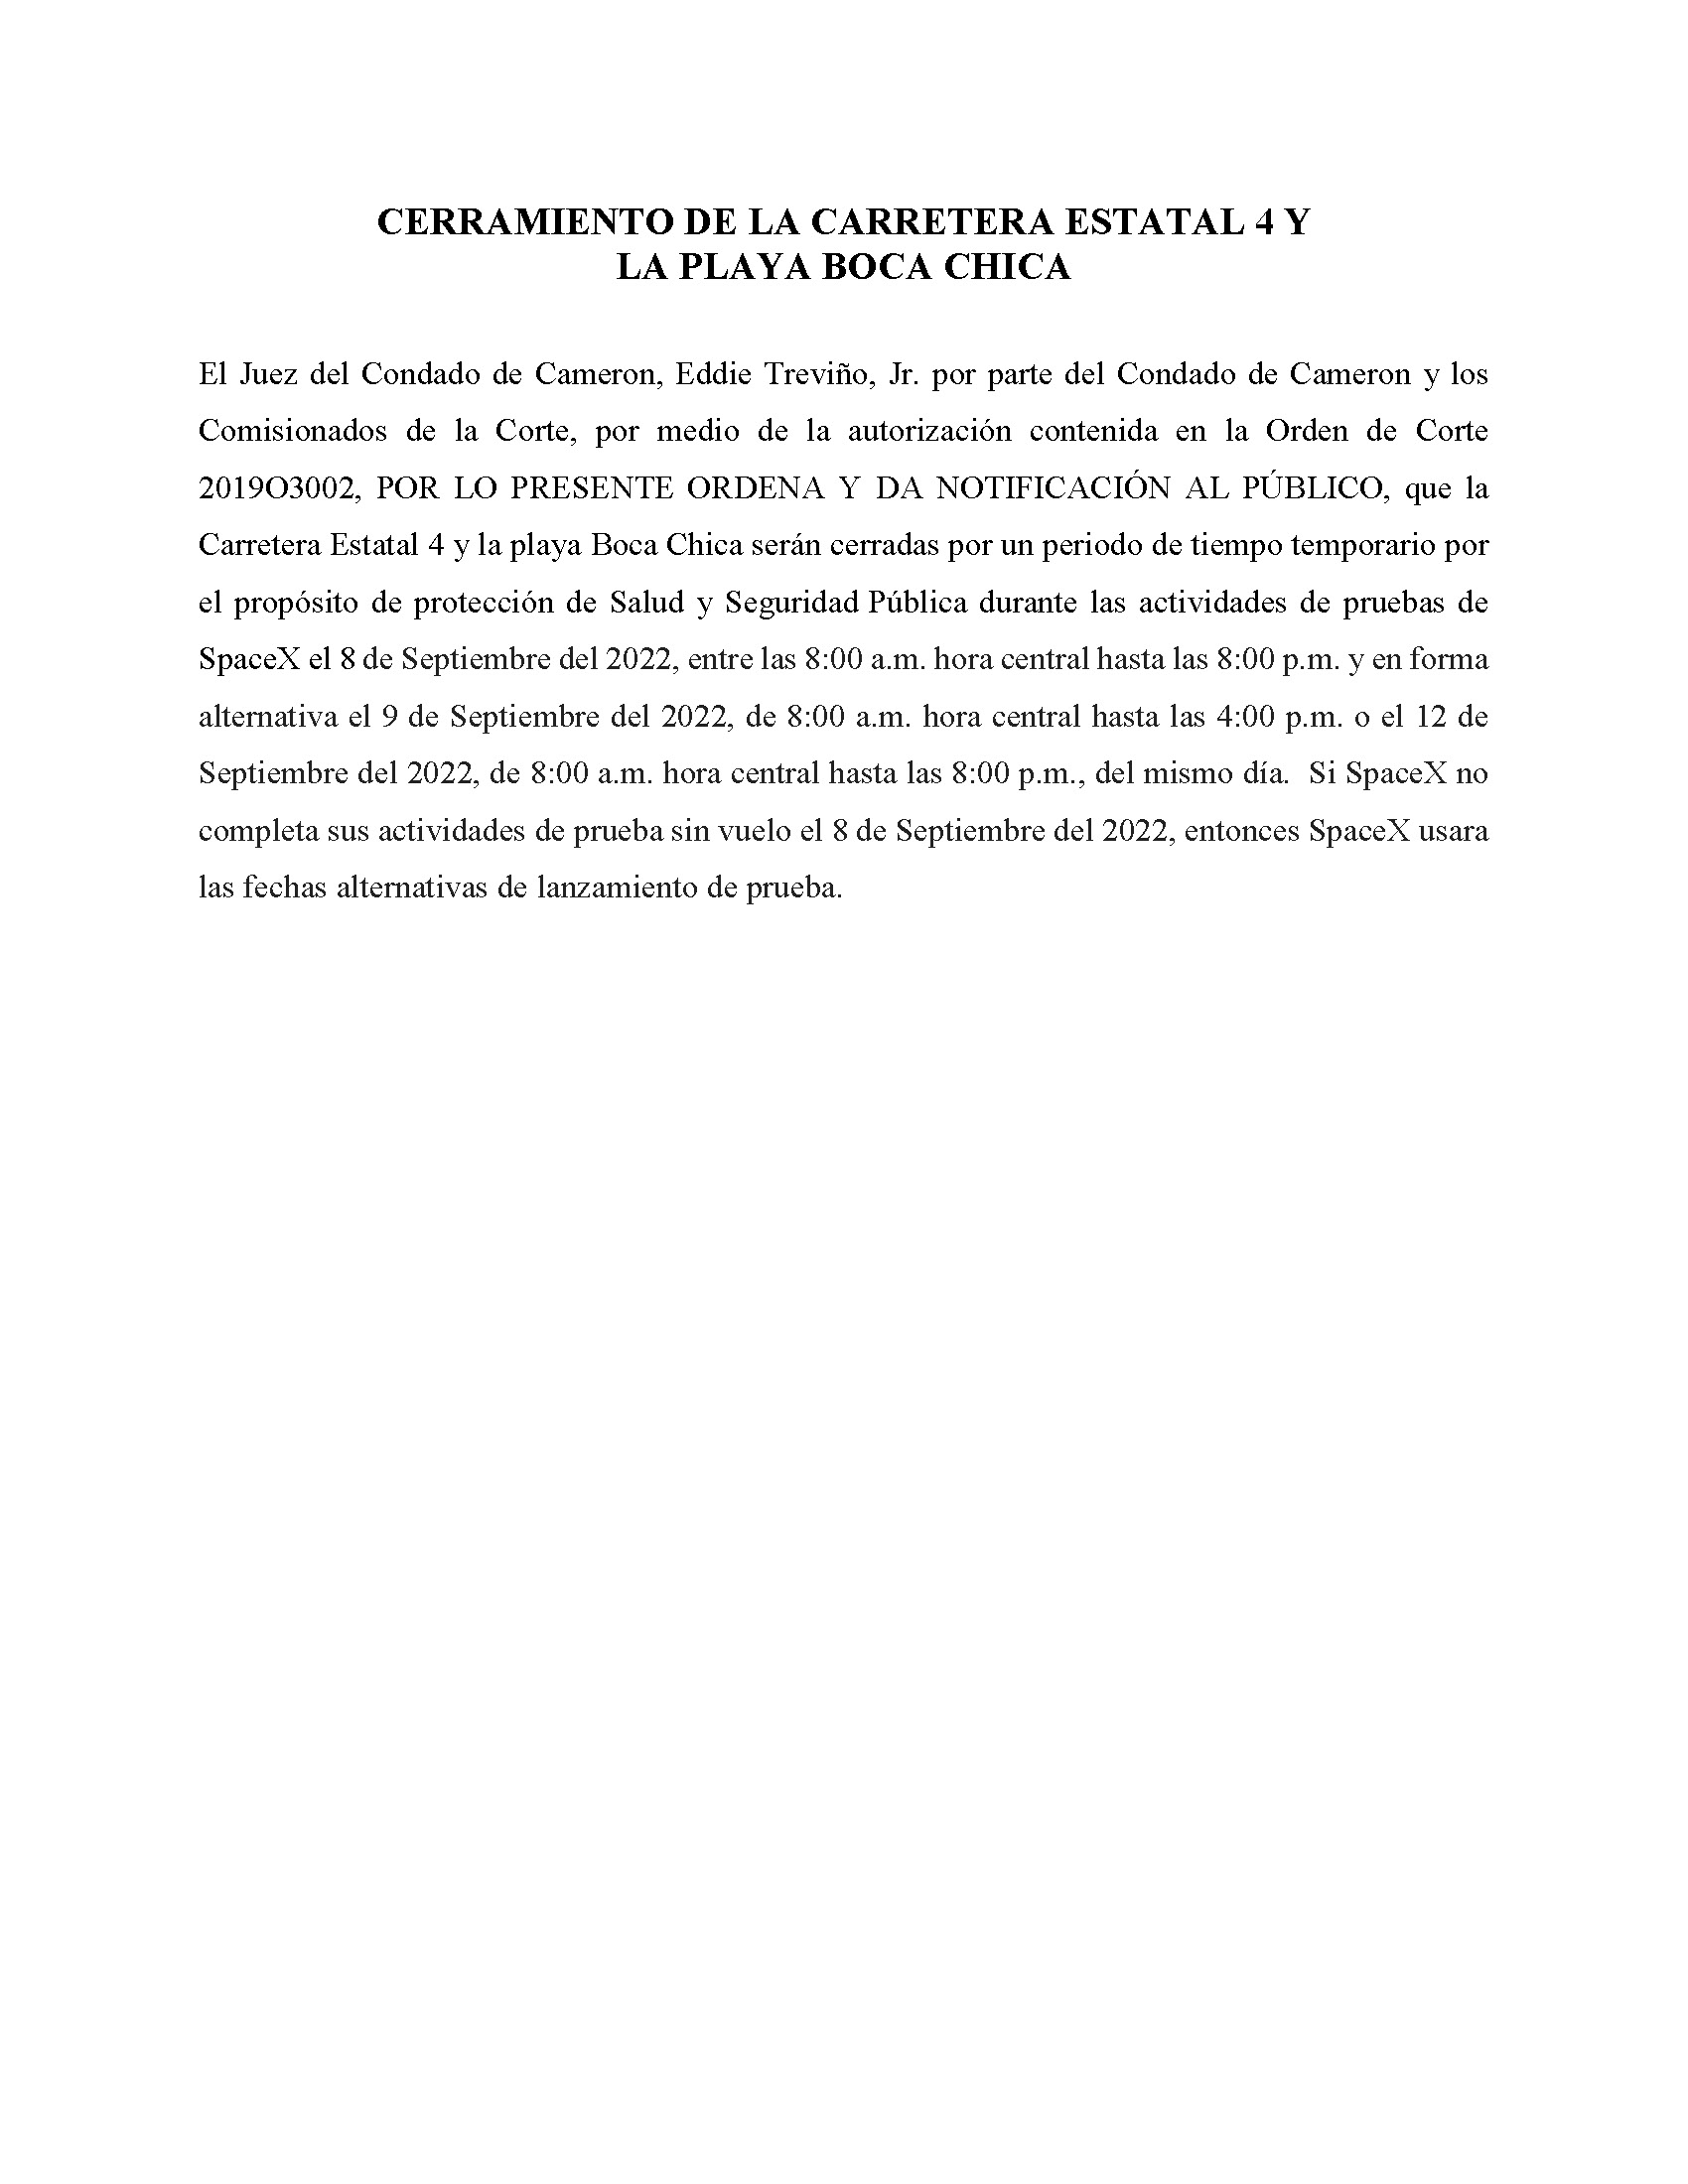 ORDER.CLOSURE OF HIGHWAY 4 Y LA PLAYA BOCA CHICA.SPANISH.09.08.2022